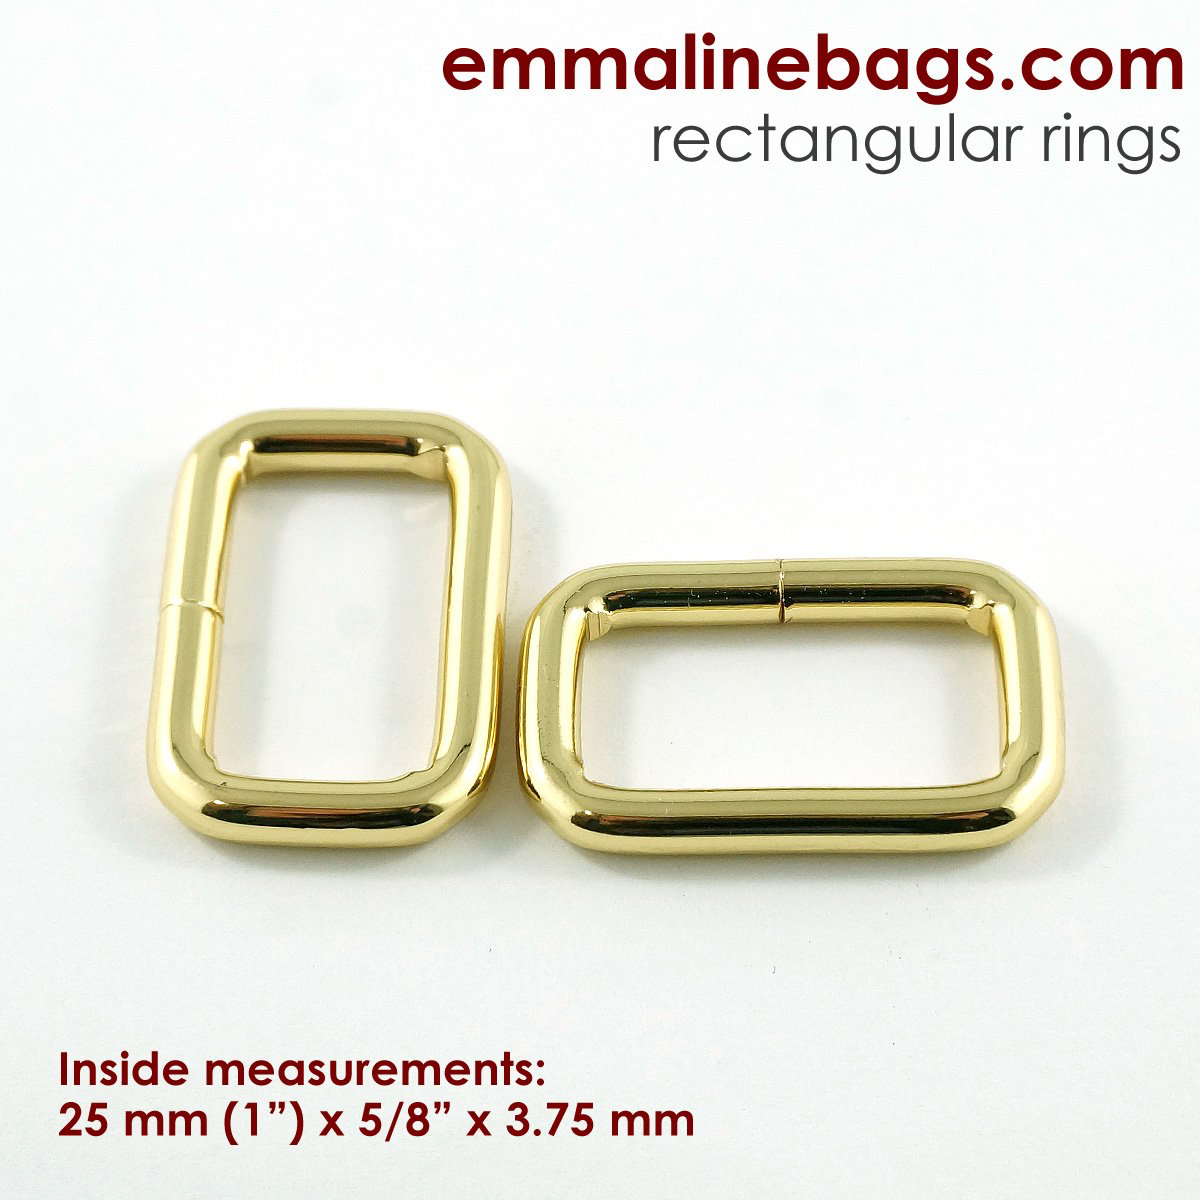 Rectangular Rings: (4 Pack) 1" (25 mm) x 5/8" (15 mm) x 3.75 mm gold